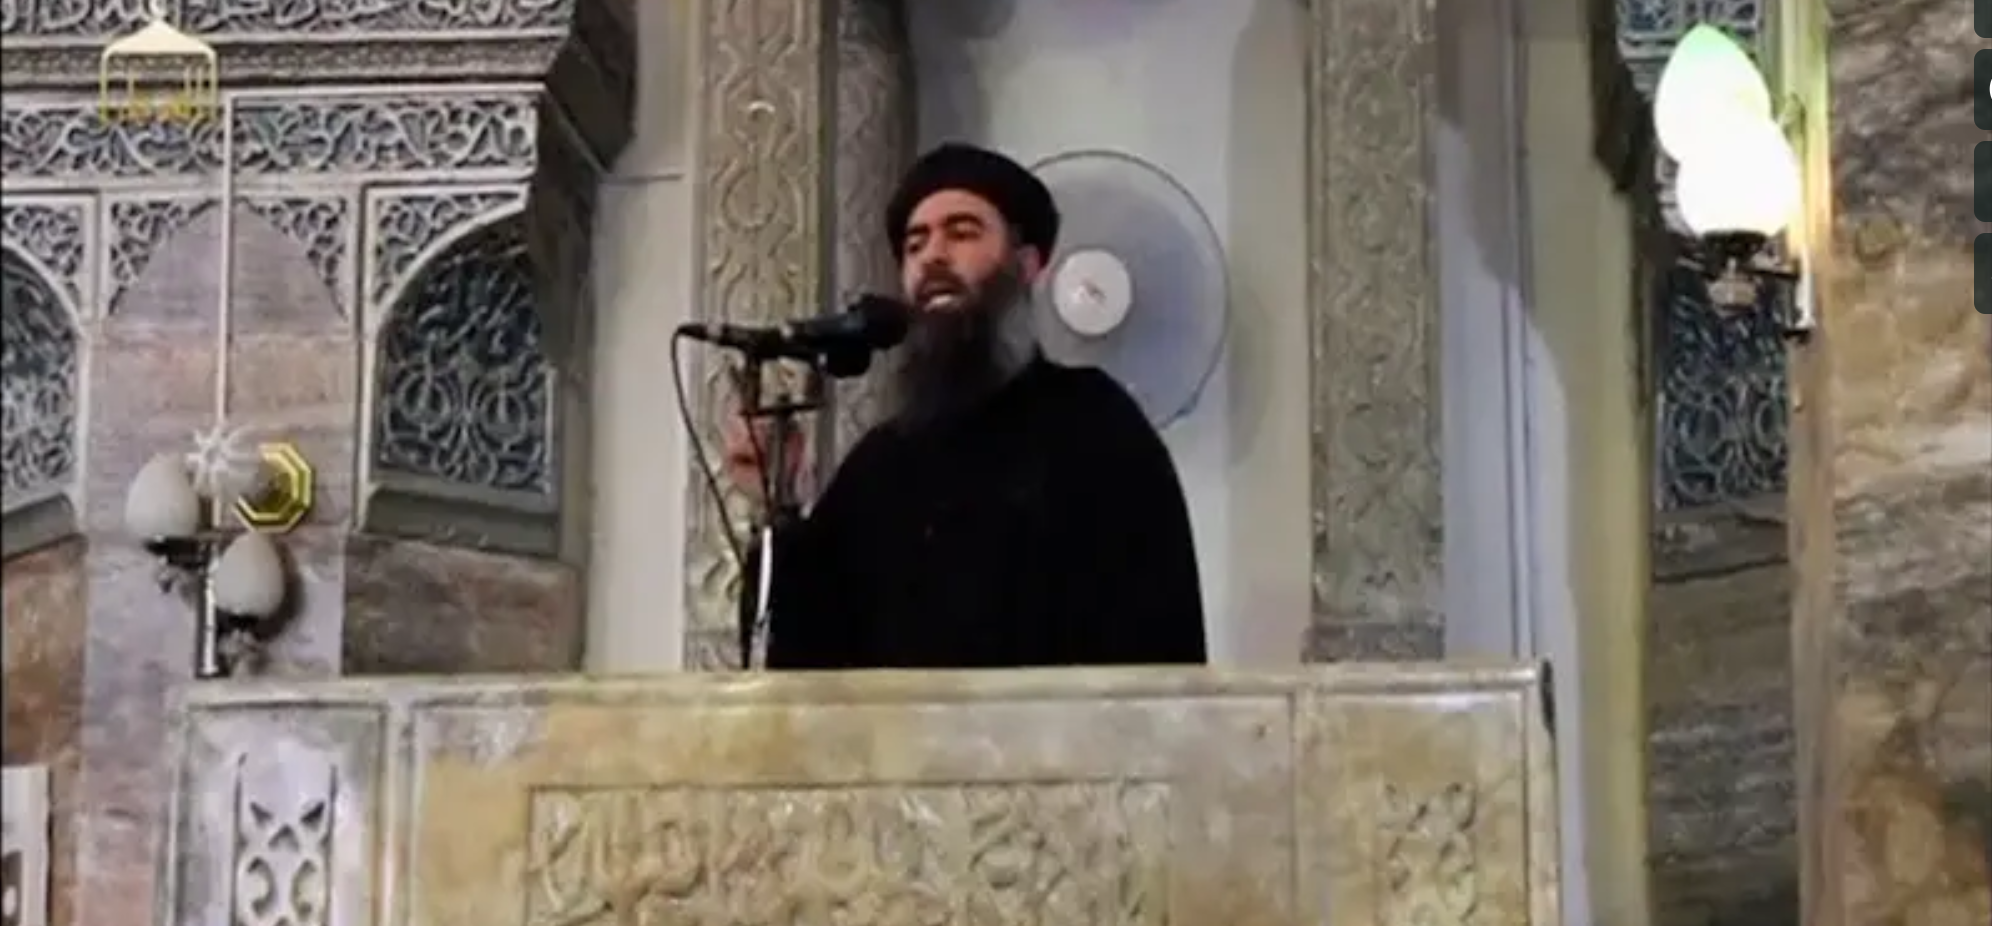 With the Islamic State’s al-Baghdadi Dead, Where does Jihadist Terrorism Go?